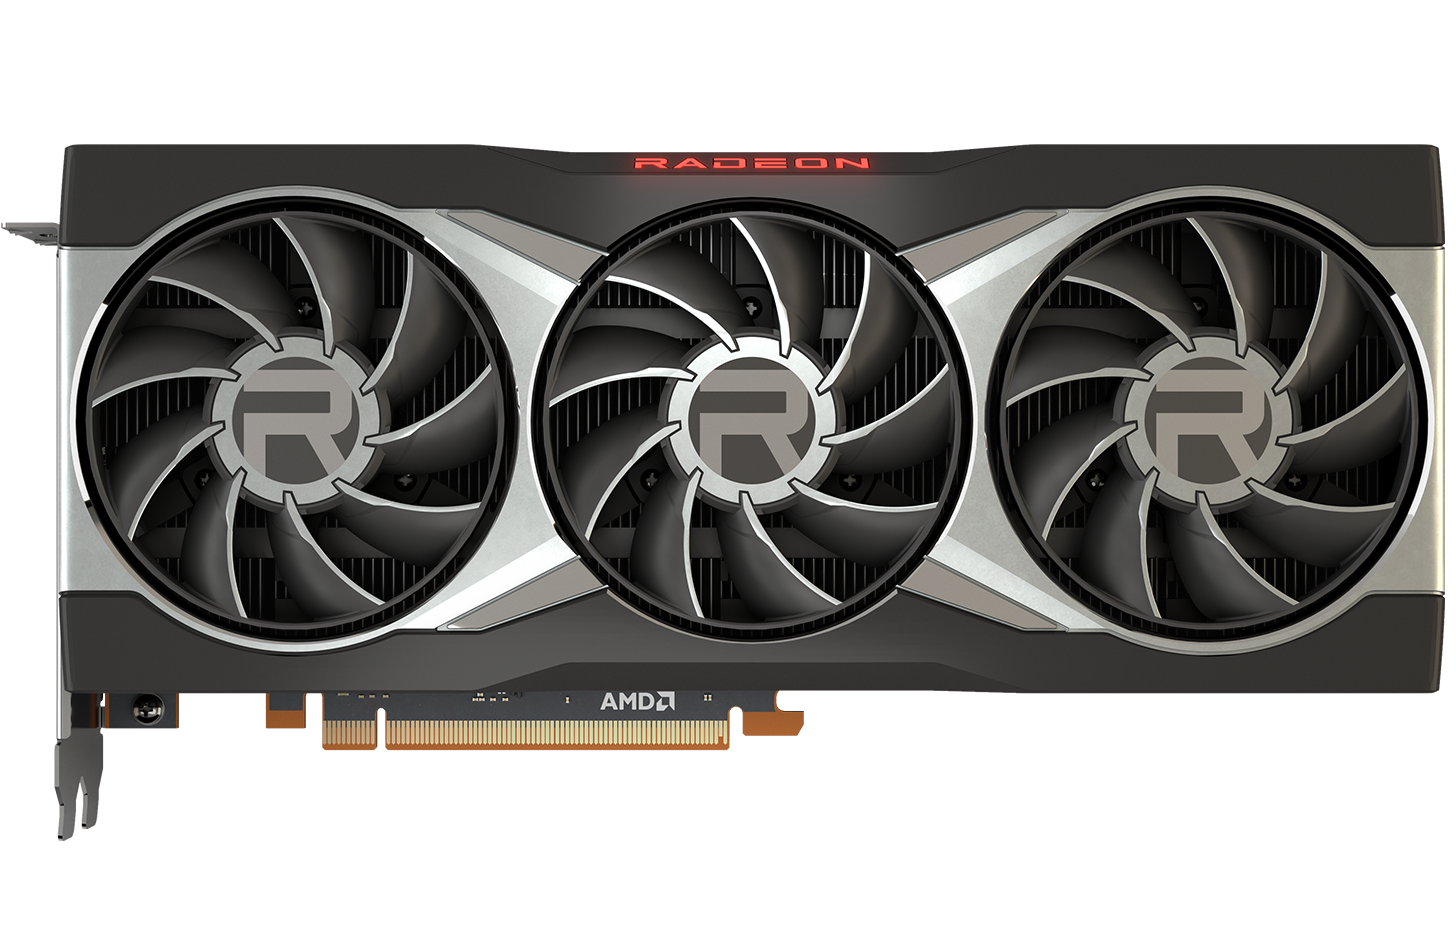 Radeon™ RX 6900 XT 16G Key Features | Graphics Card - GIGABYTE U.S.A.